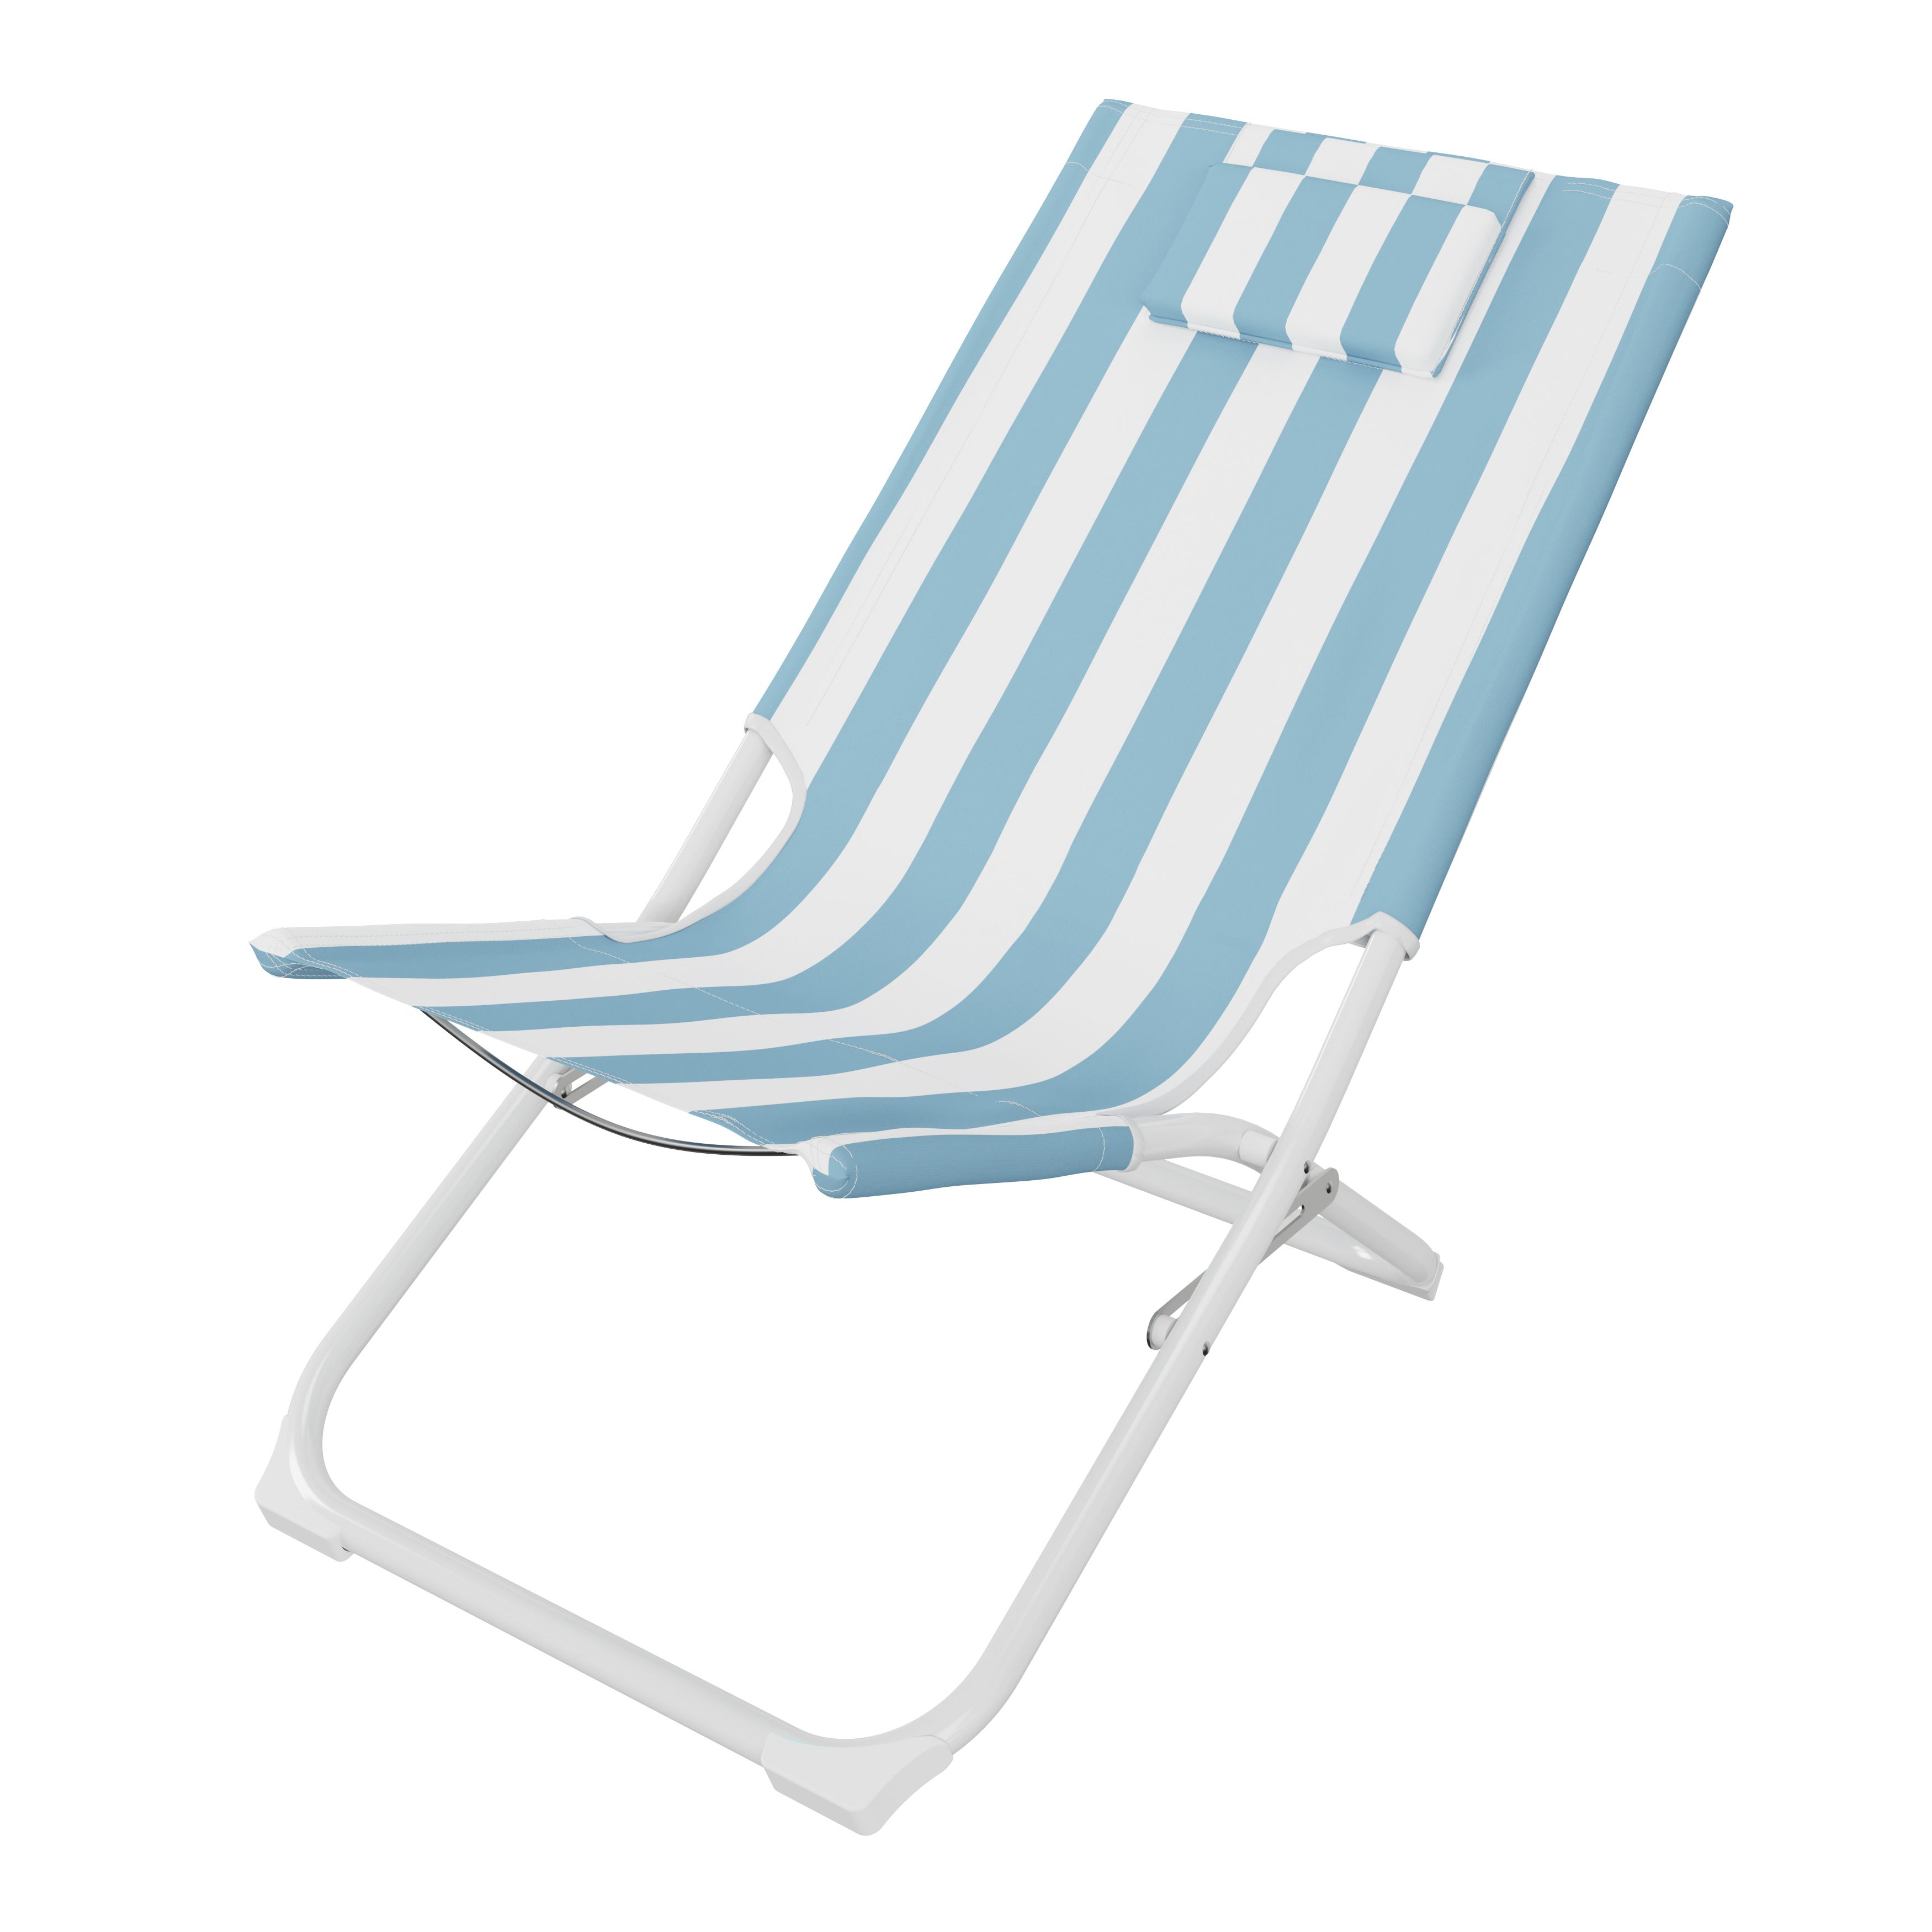 Curacao Still water blue Metal Foldable Cabana striped Beach chair